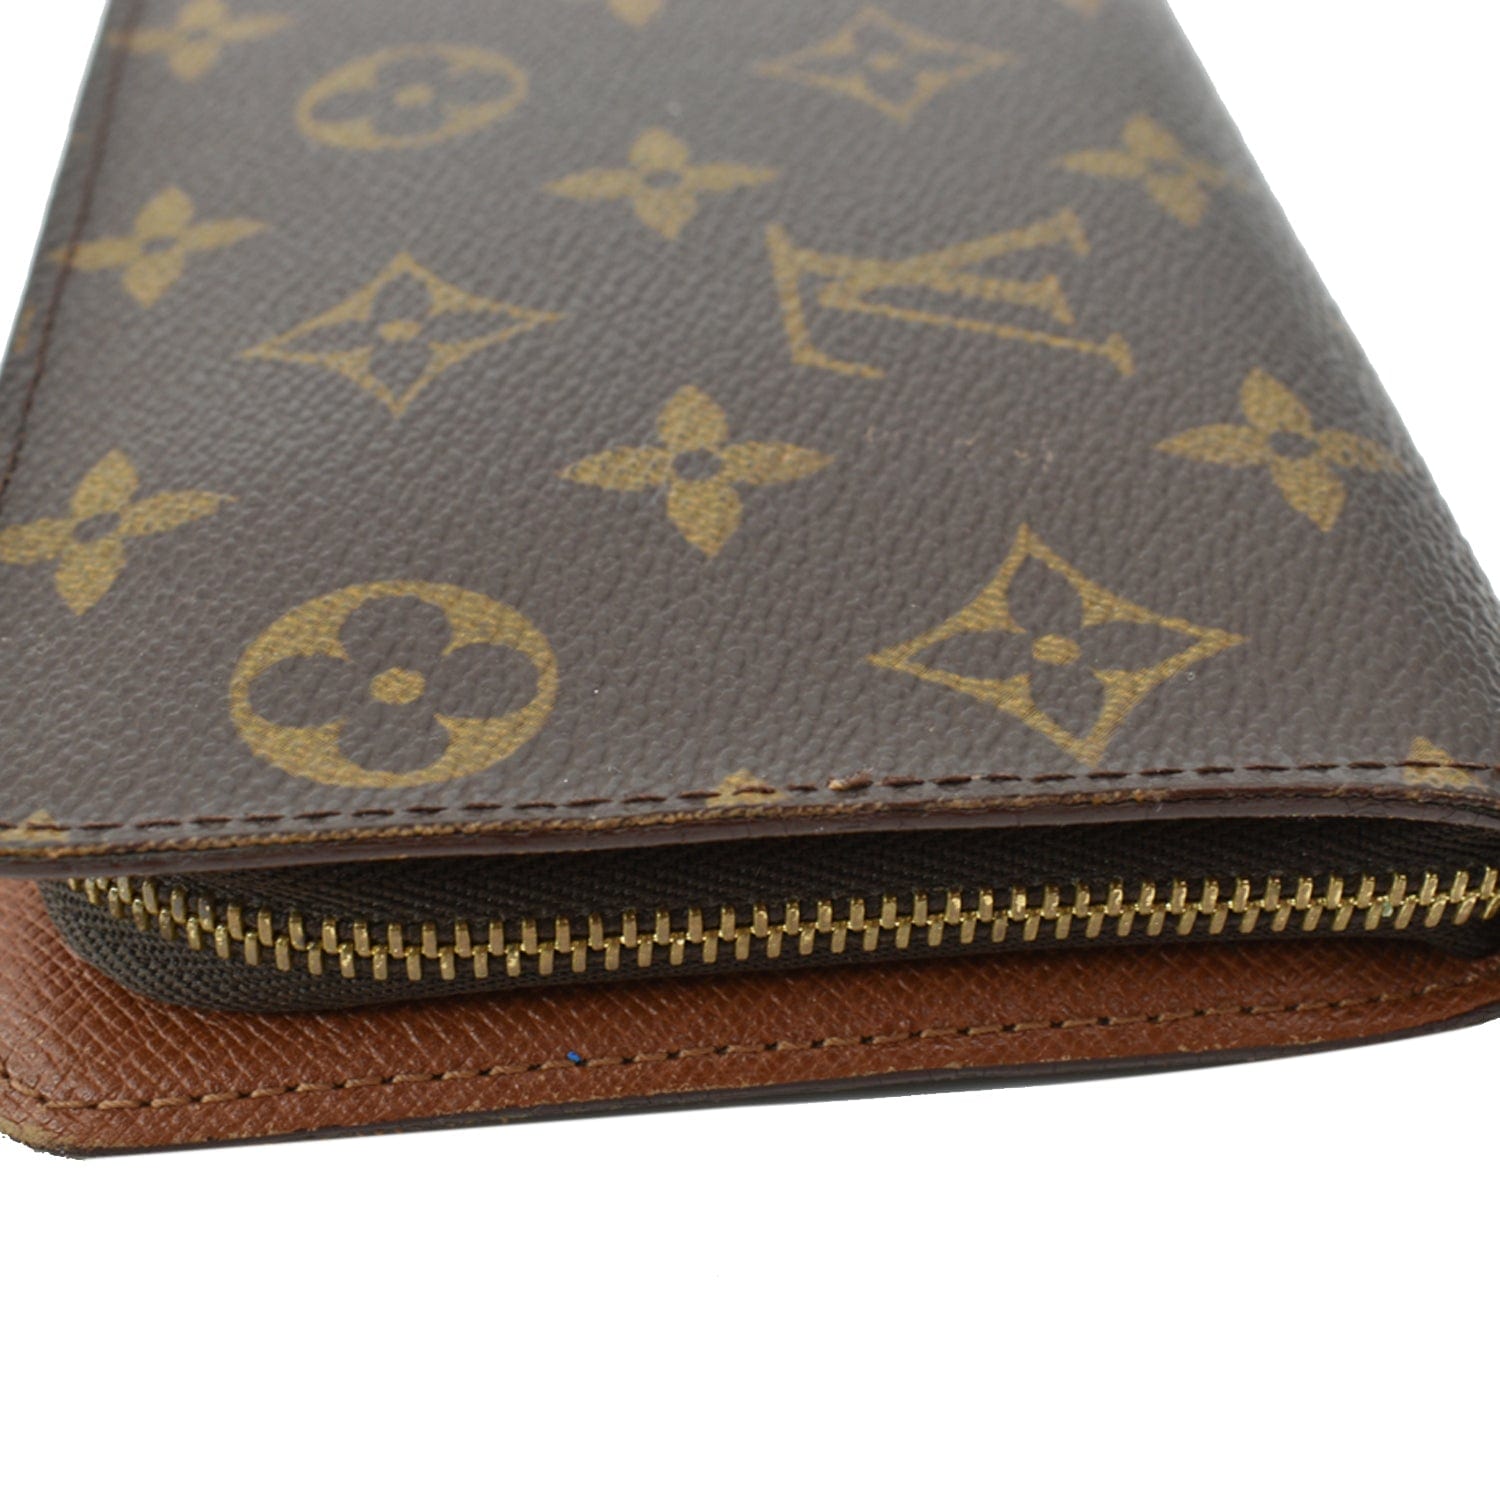 Zippy wallet Louis Vuitton Brown in Other - 38046479